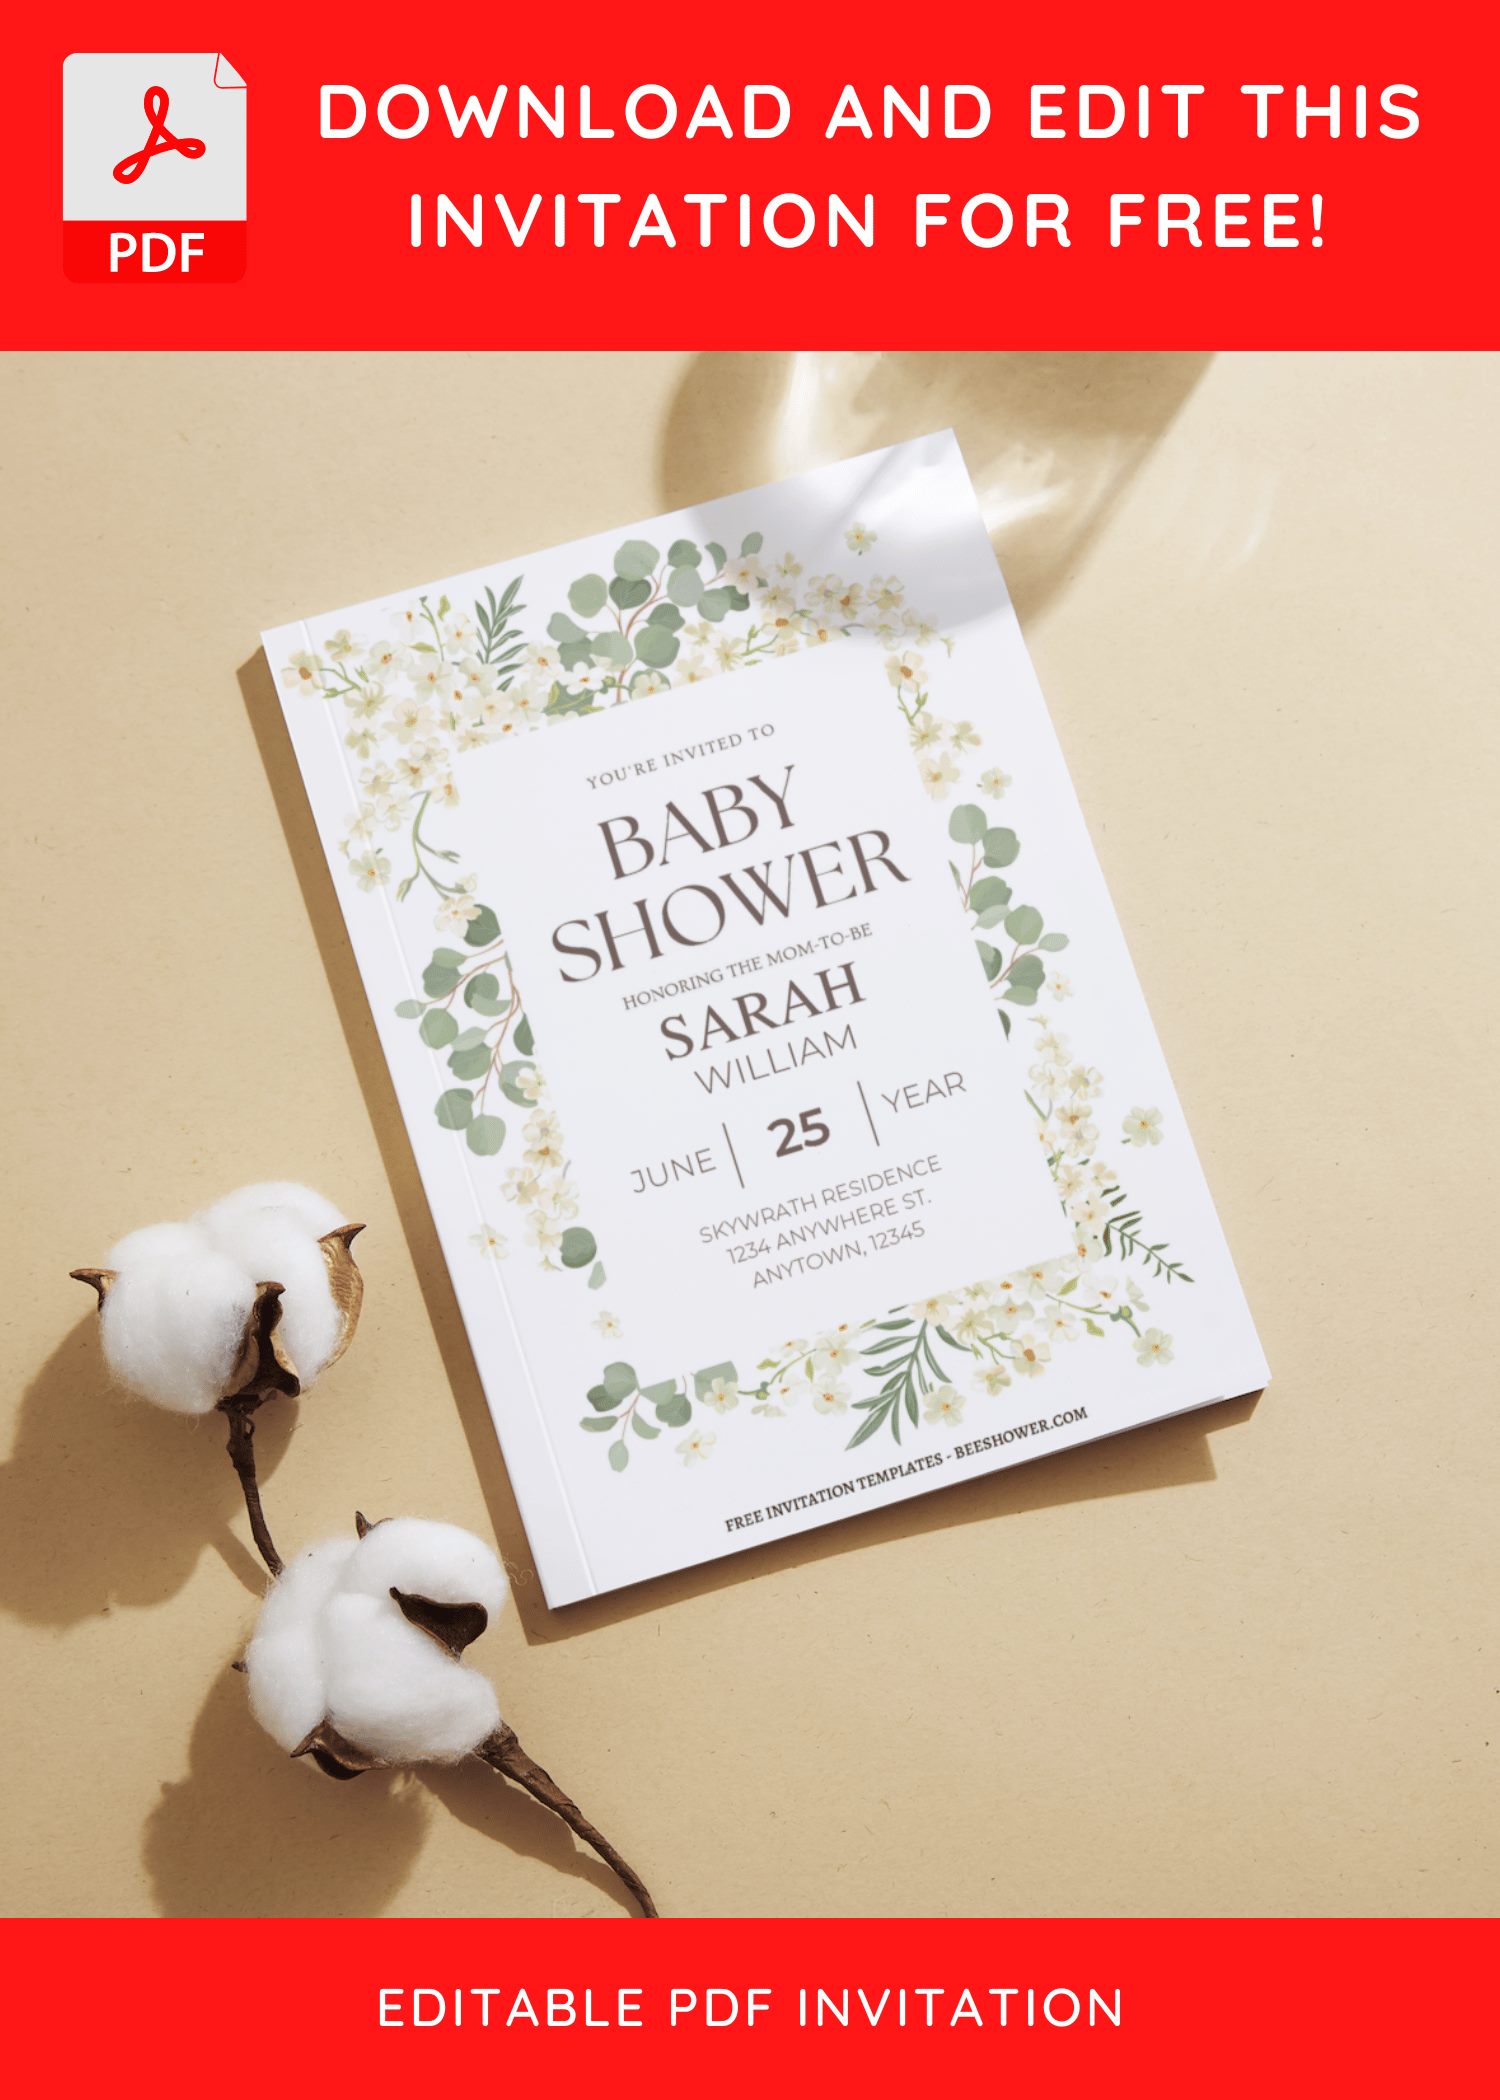 (Free Editable PDF) Awe-inspiring Pastel Floral Baby Shower Invitation Templates C